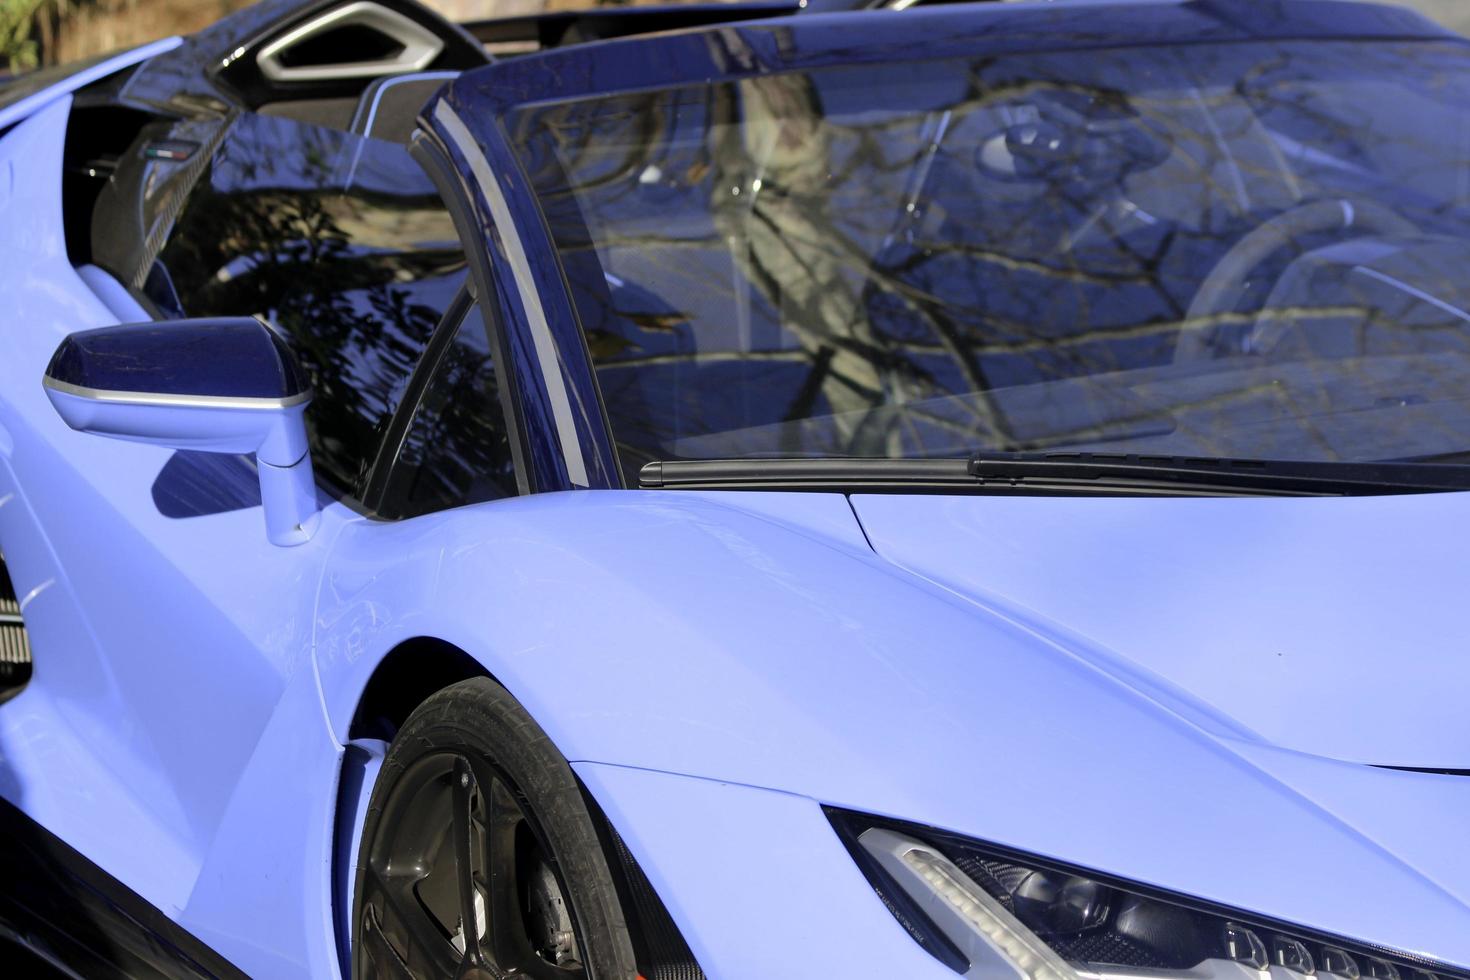 Blue sports car beautiful sleek design photo